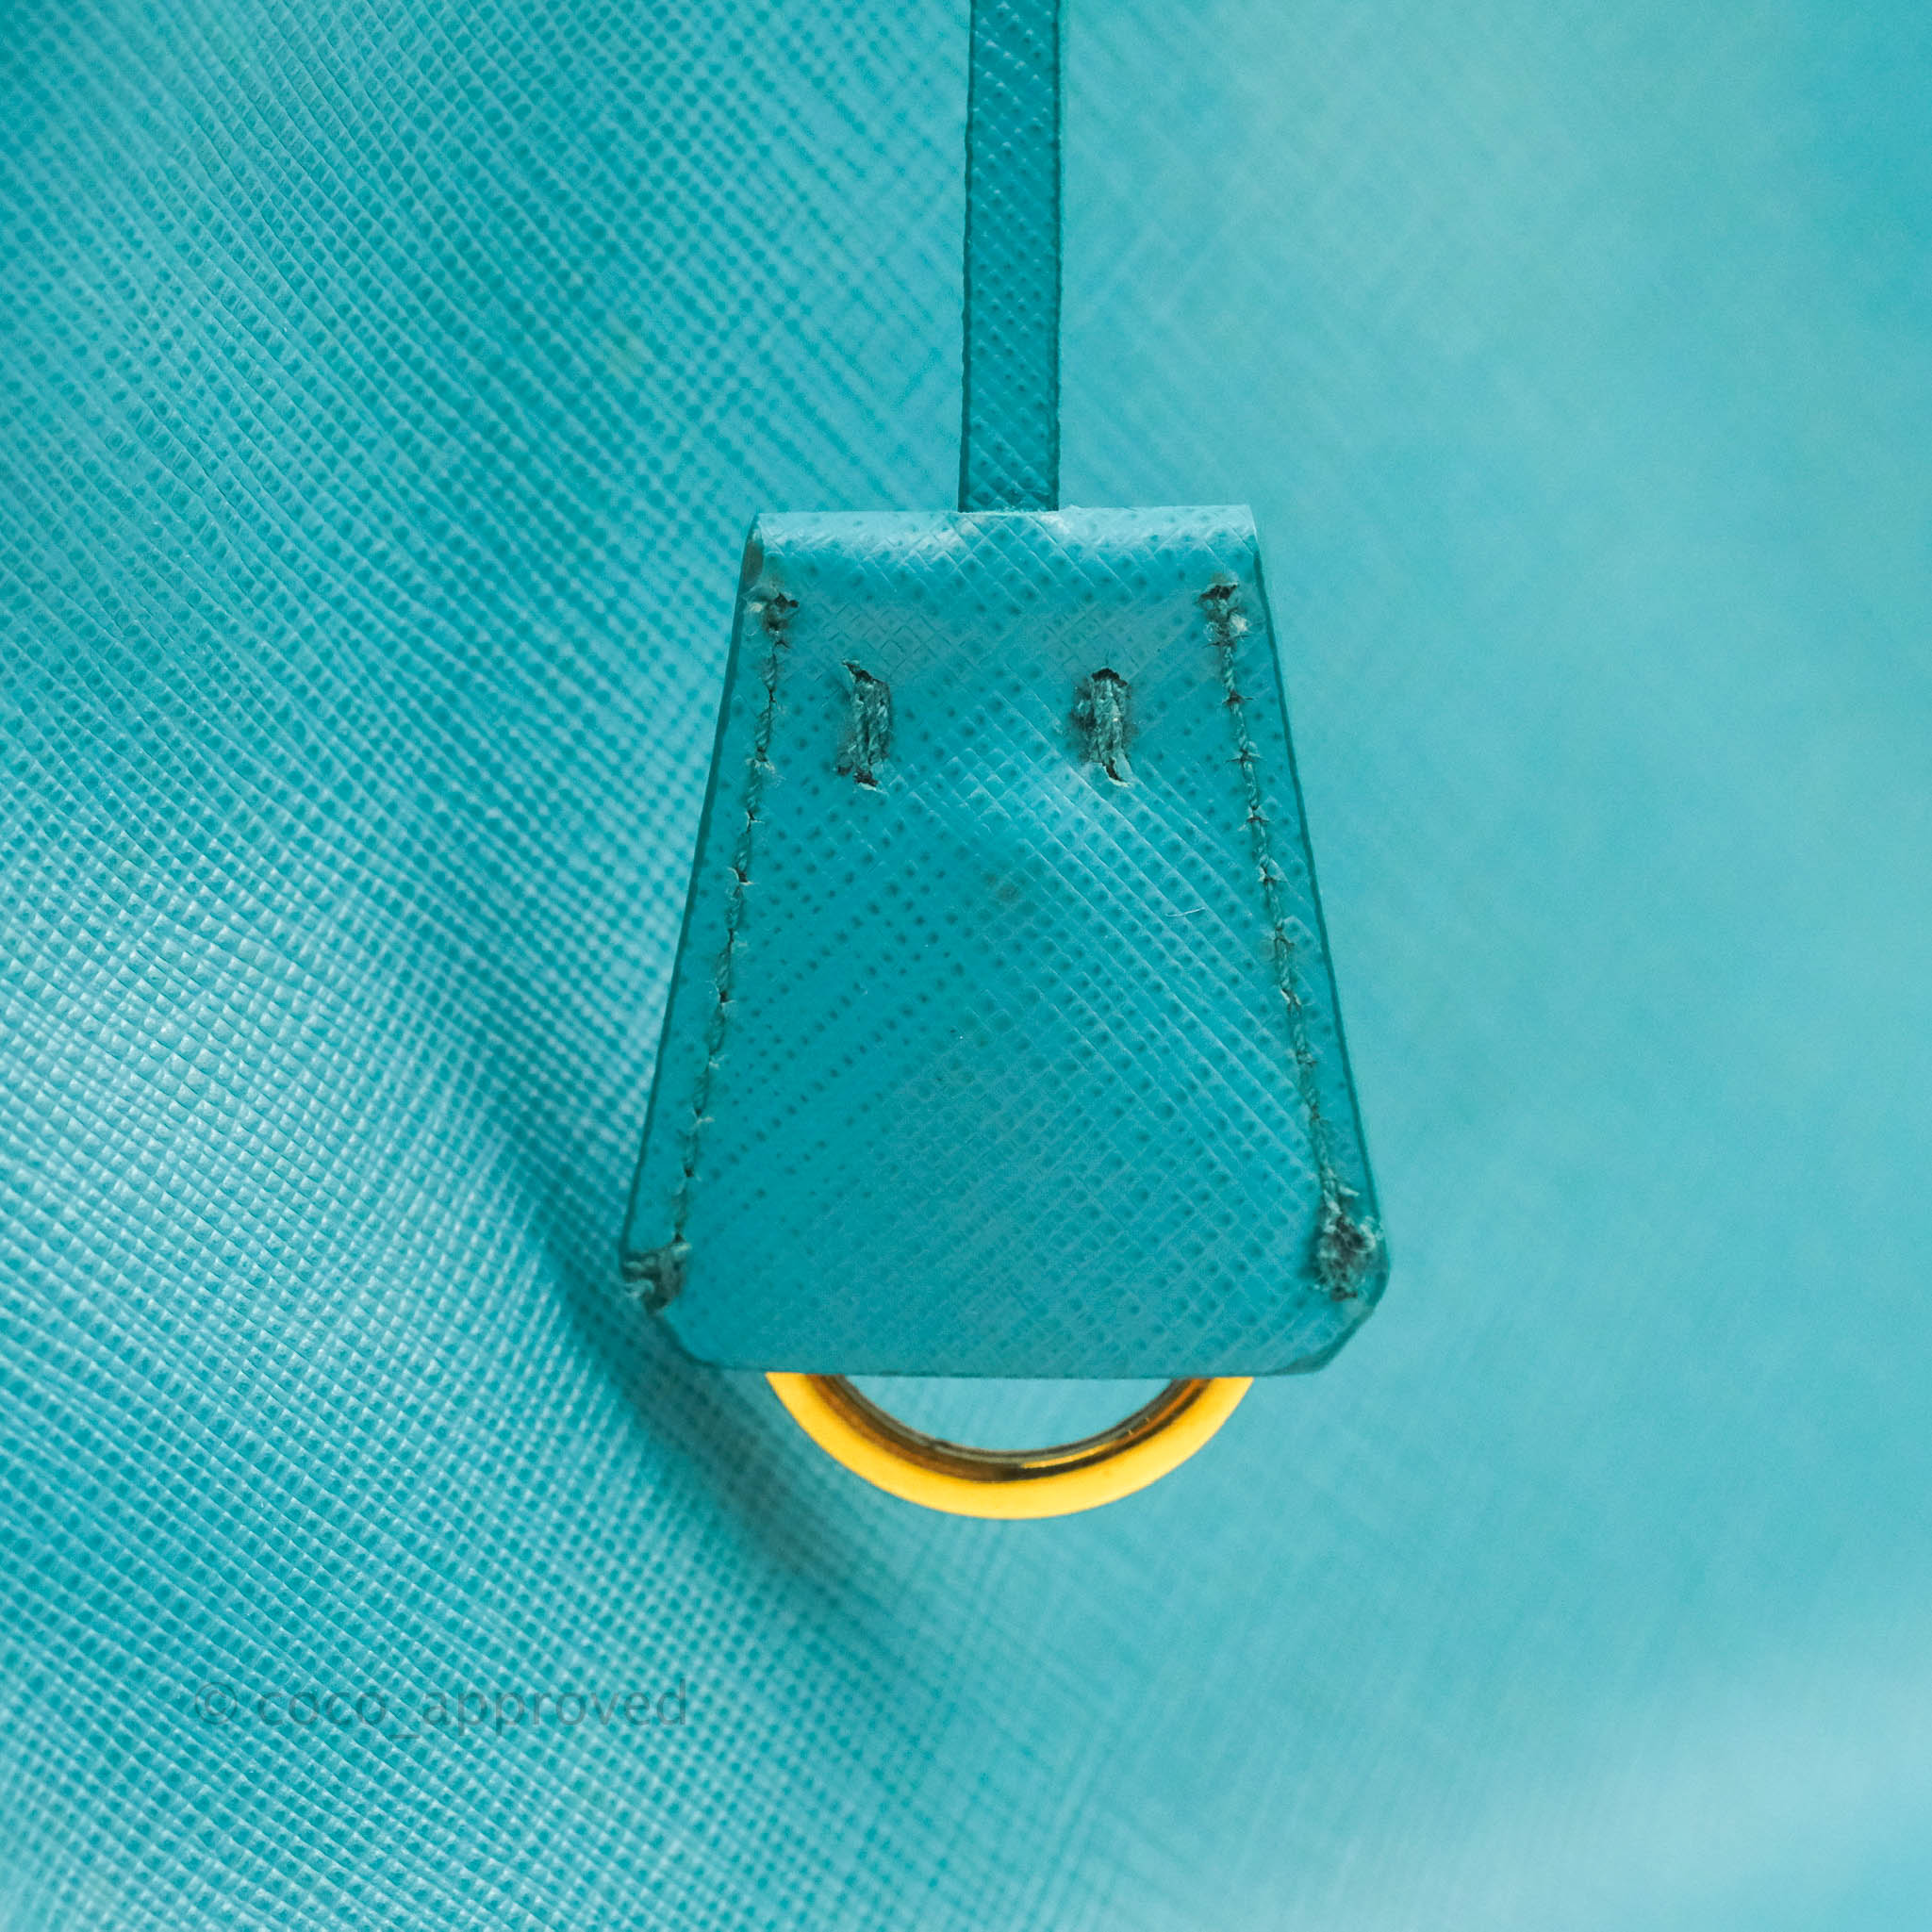 Prada Double Zip Lux Saffiano Tiffany Blue Large Tote Bag – Coco Approved  Studio